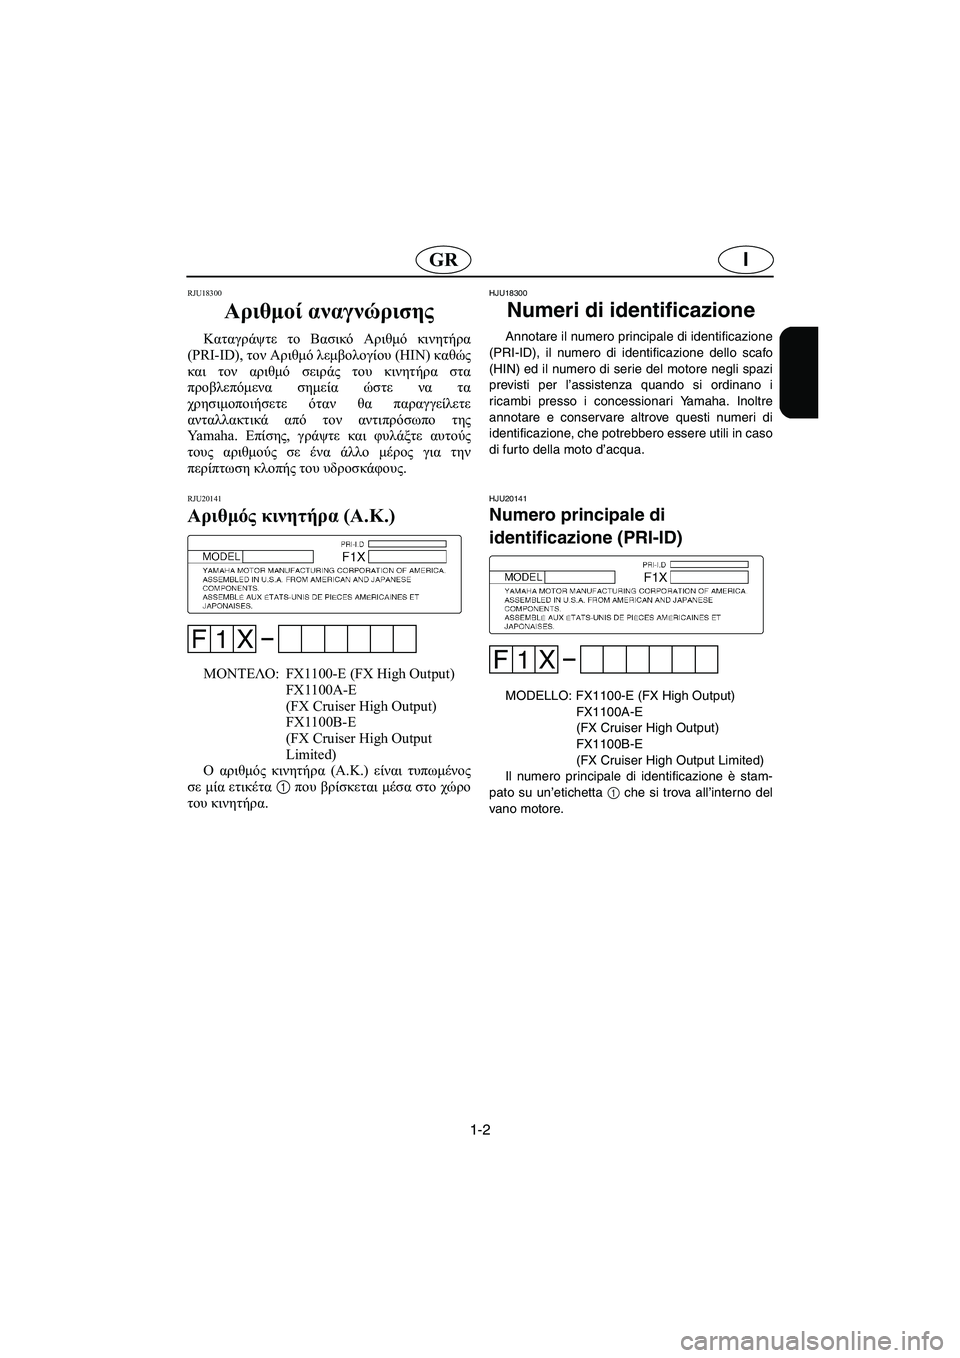 YAMAHA FX HO 2006  Manuale duso (in Italian) 1-2
IGR
RJU18300 
Αριθμοί αναγνώρισης  
Καταγράψτε το Βασικό Αριθμό κινητήρα
(PRI-ID), τον Αριθμό λεμβολογίου (HIN) καθώς
κ�